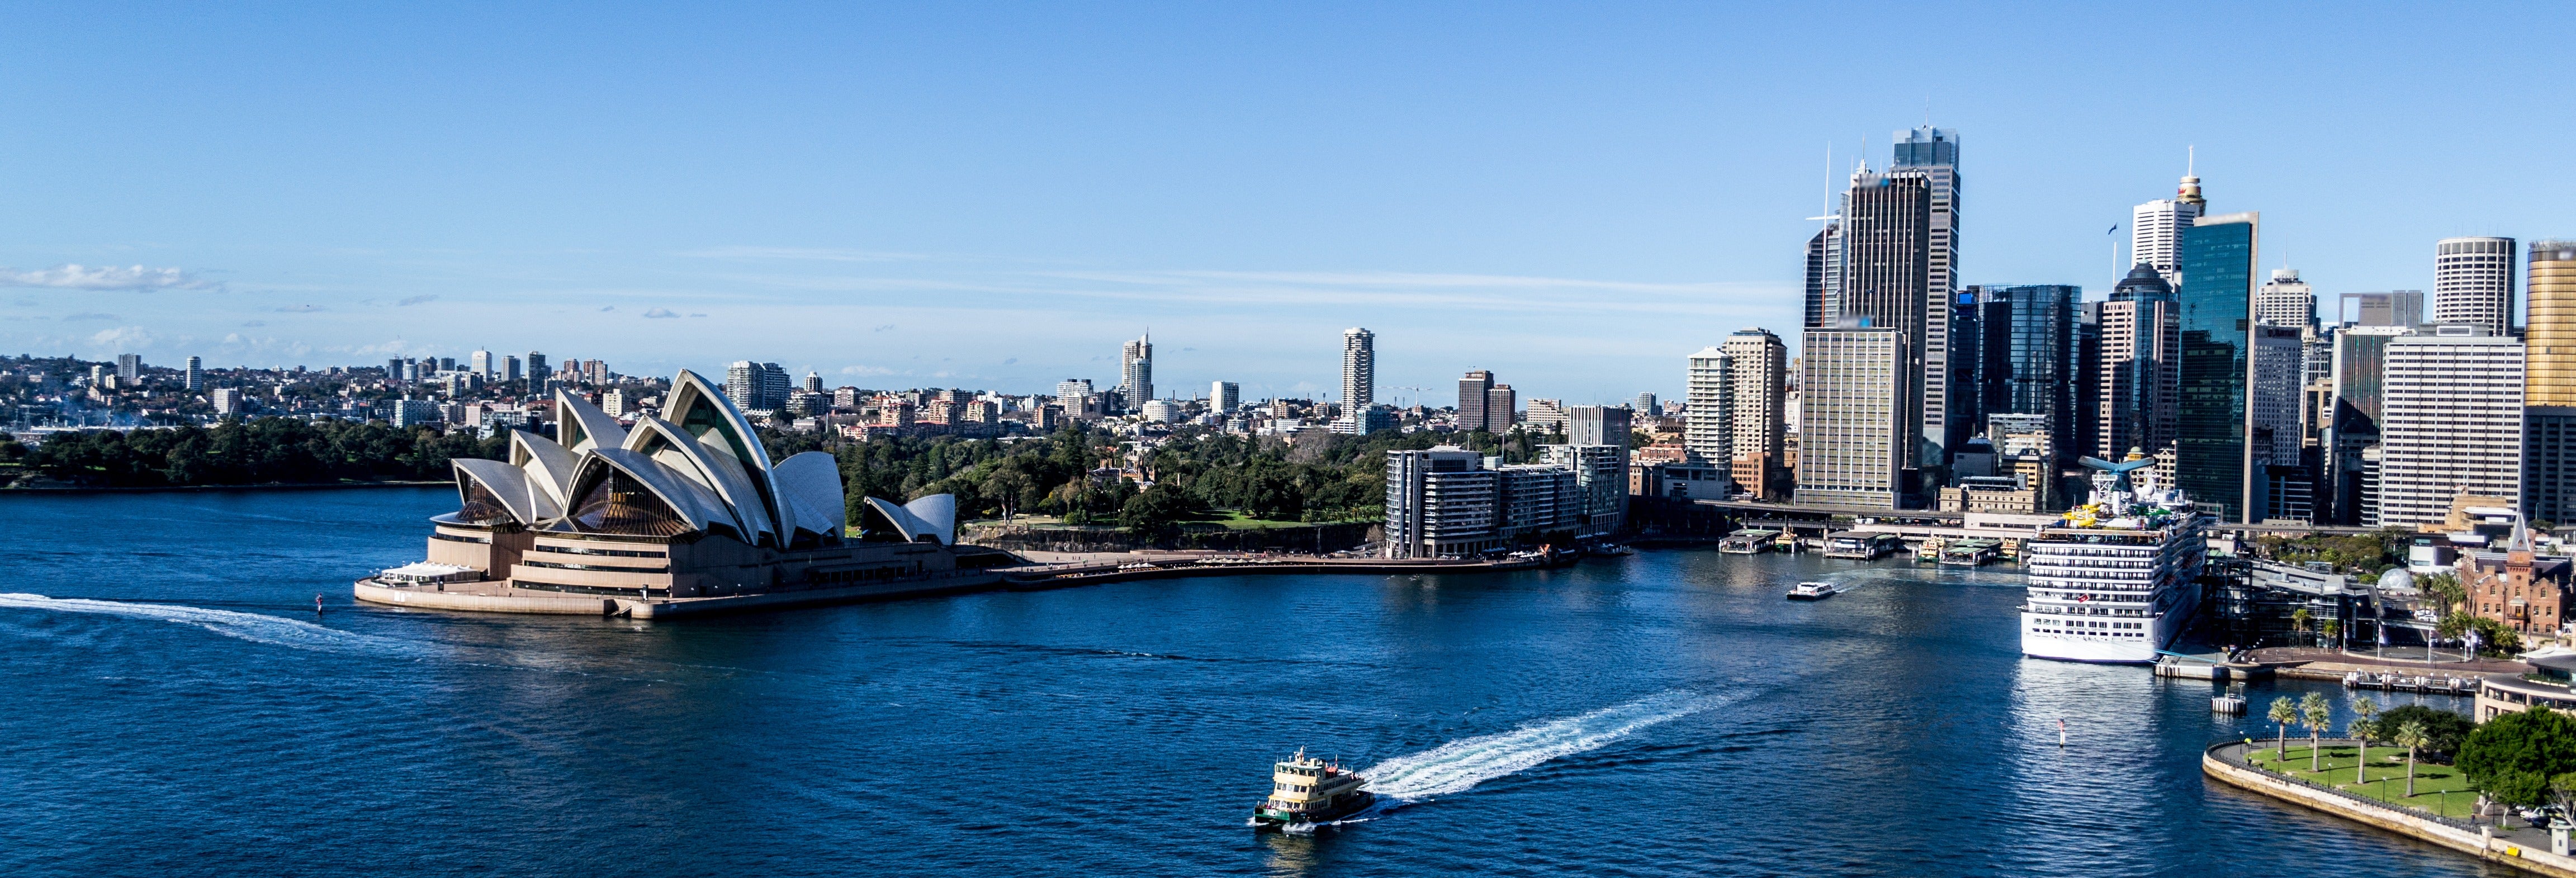 Passeio de barco pela baía de Sydney